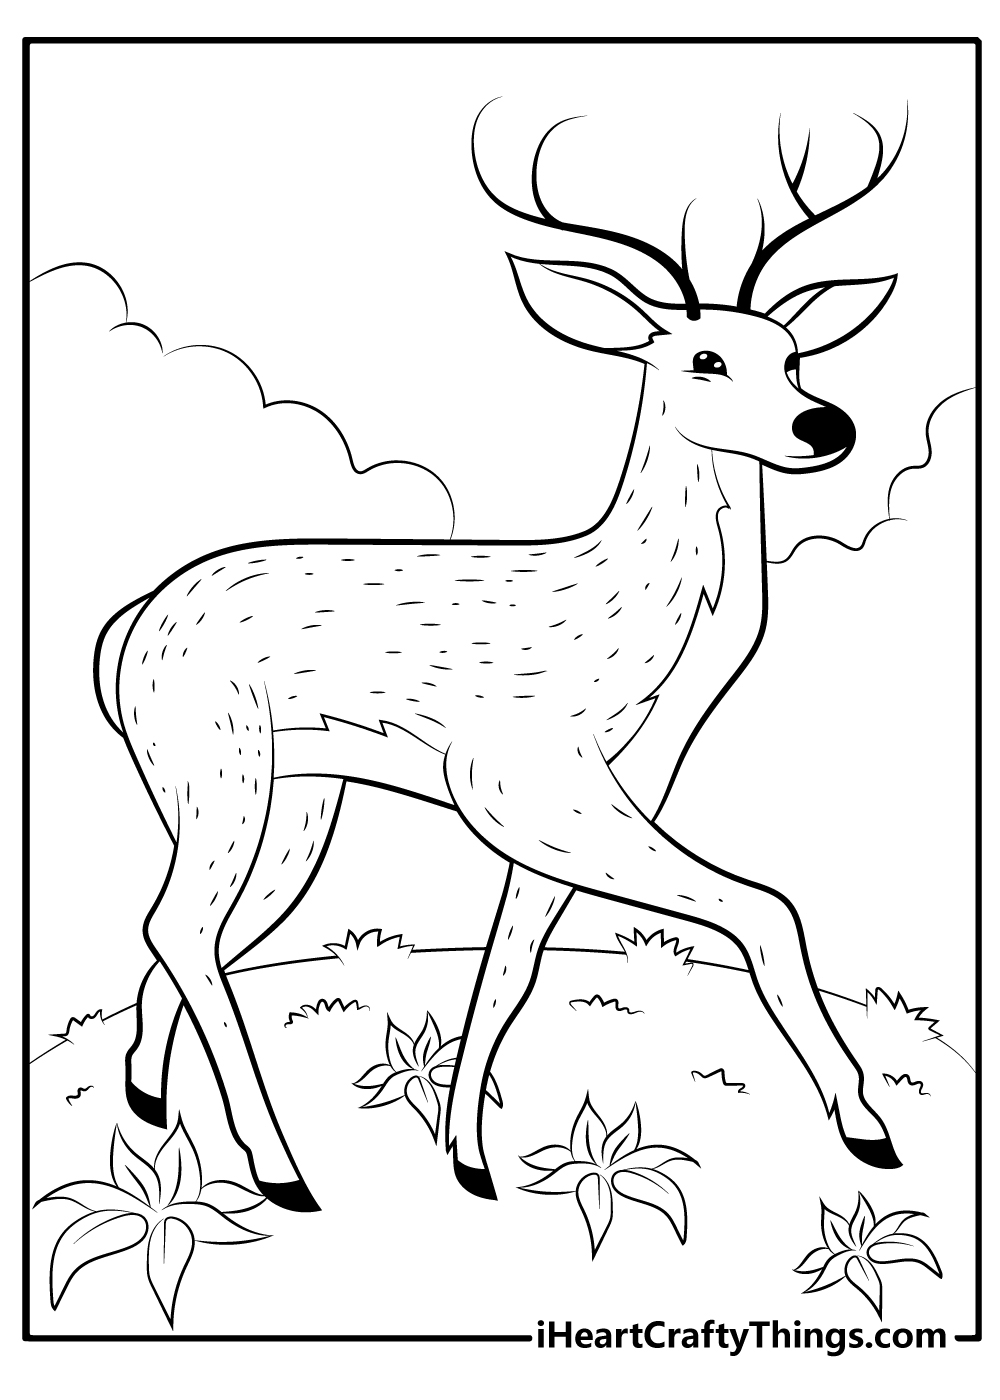 Deer Coloring Pages free download pdf